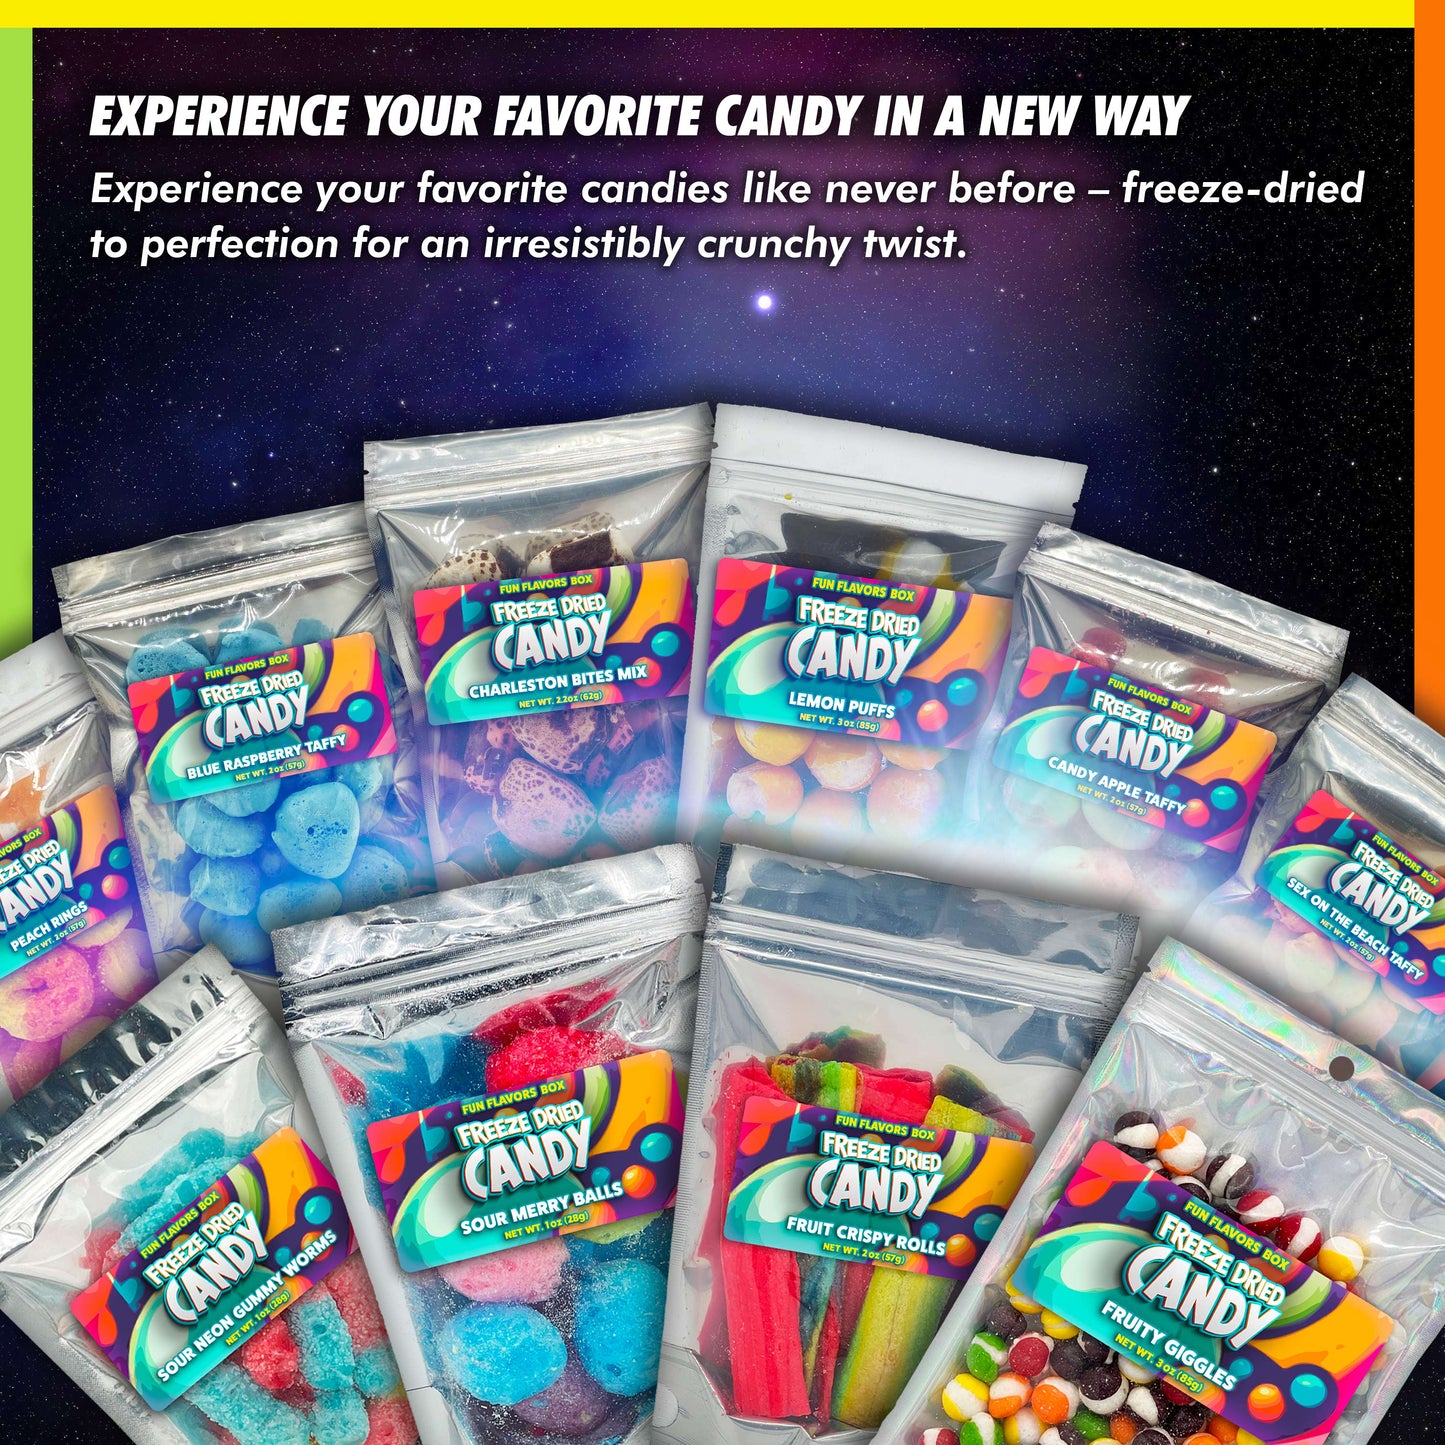 Sugar Free Freeze-Dried Gummy Bears Variety Pack – Crunch Candy Treats, 1 oz